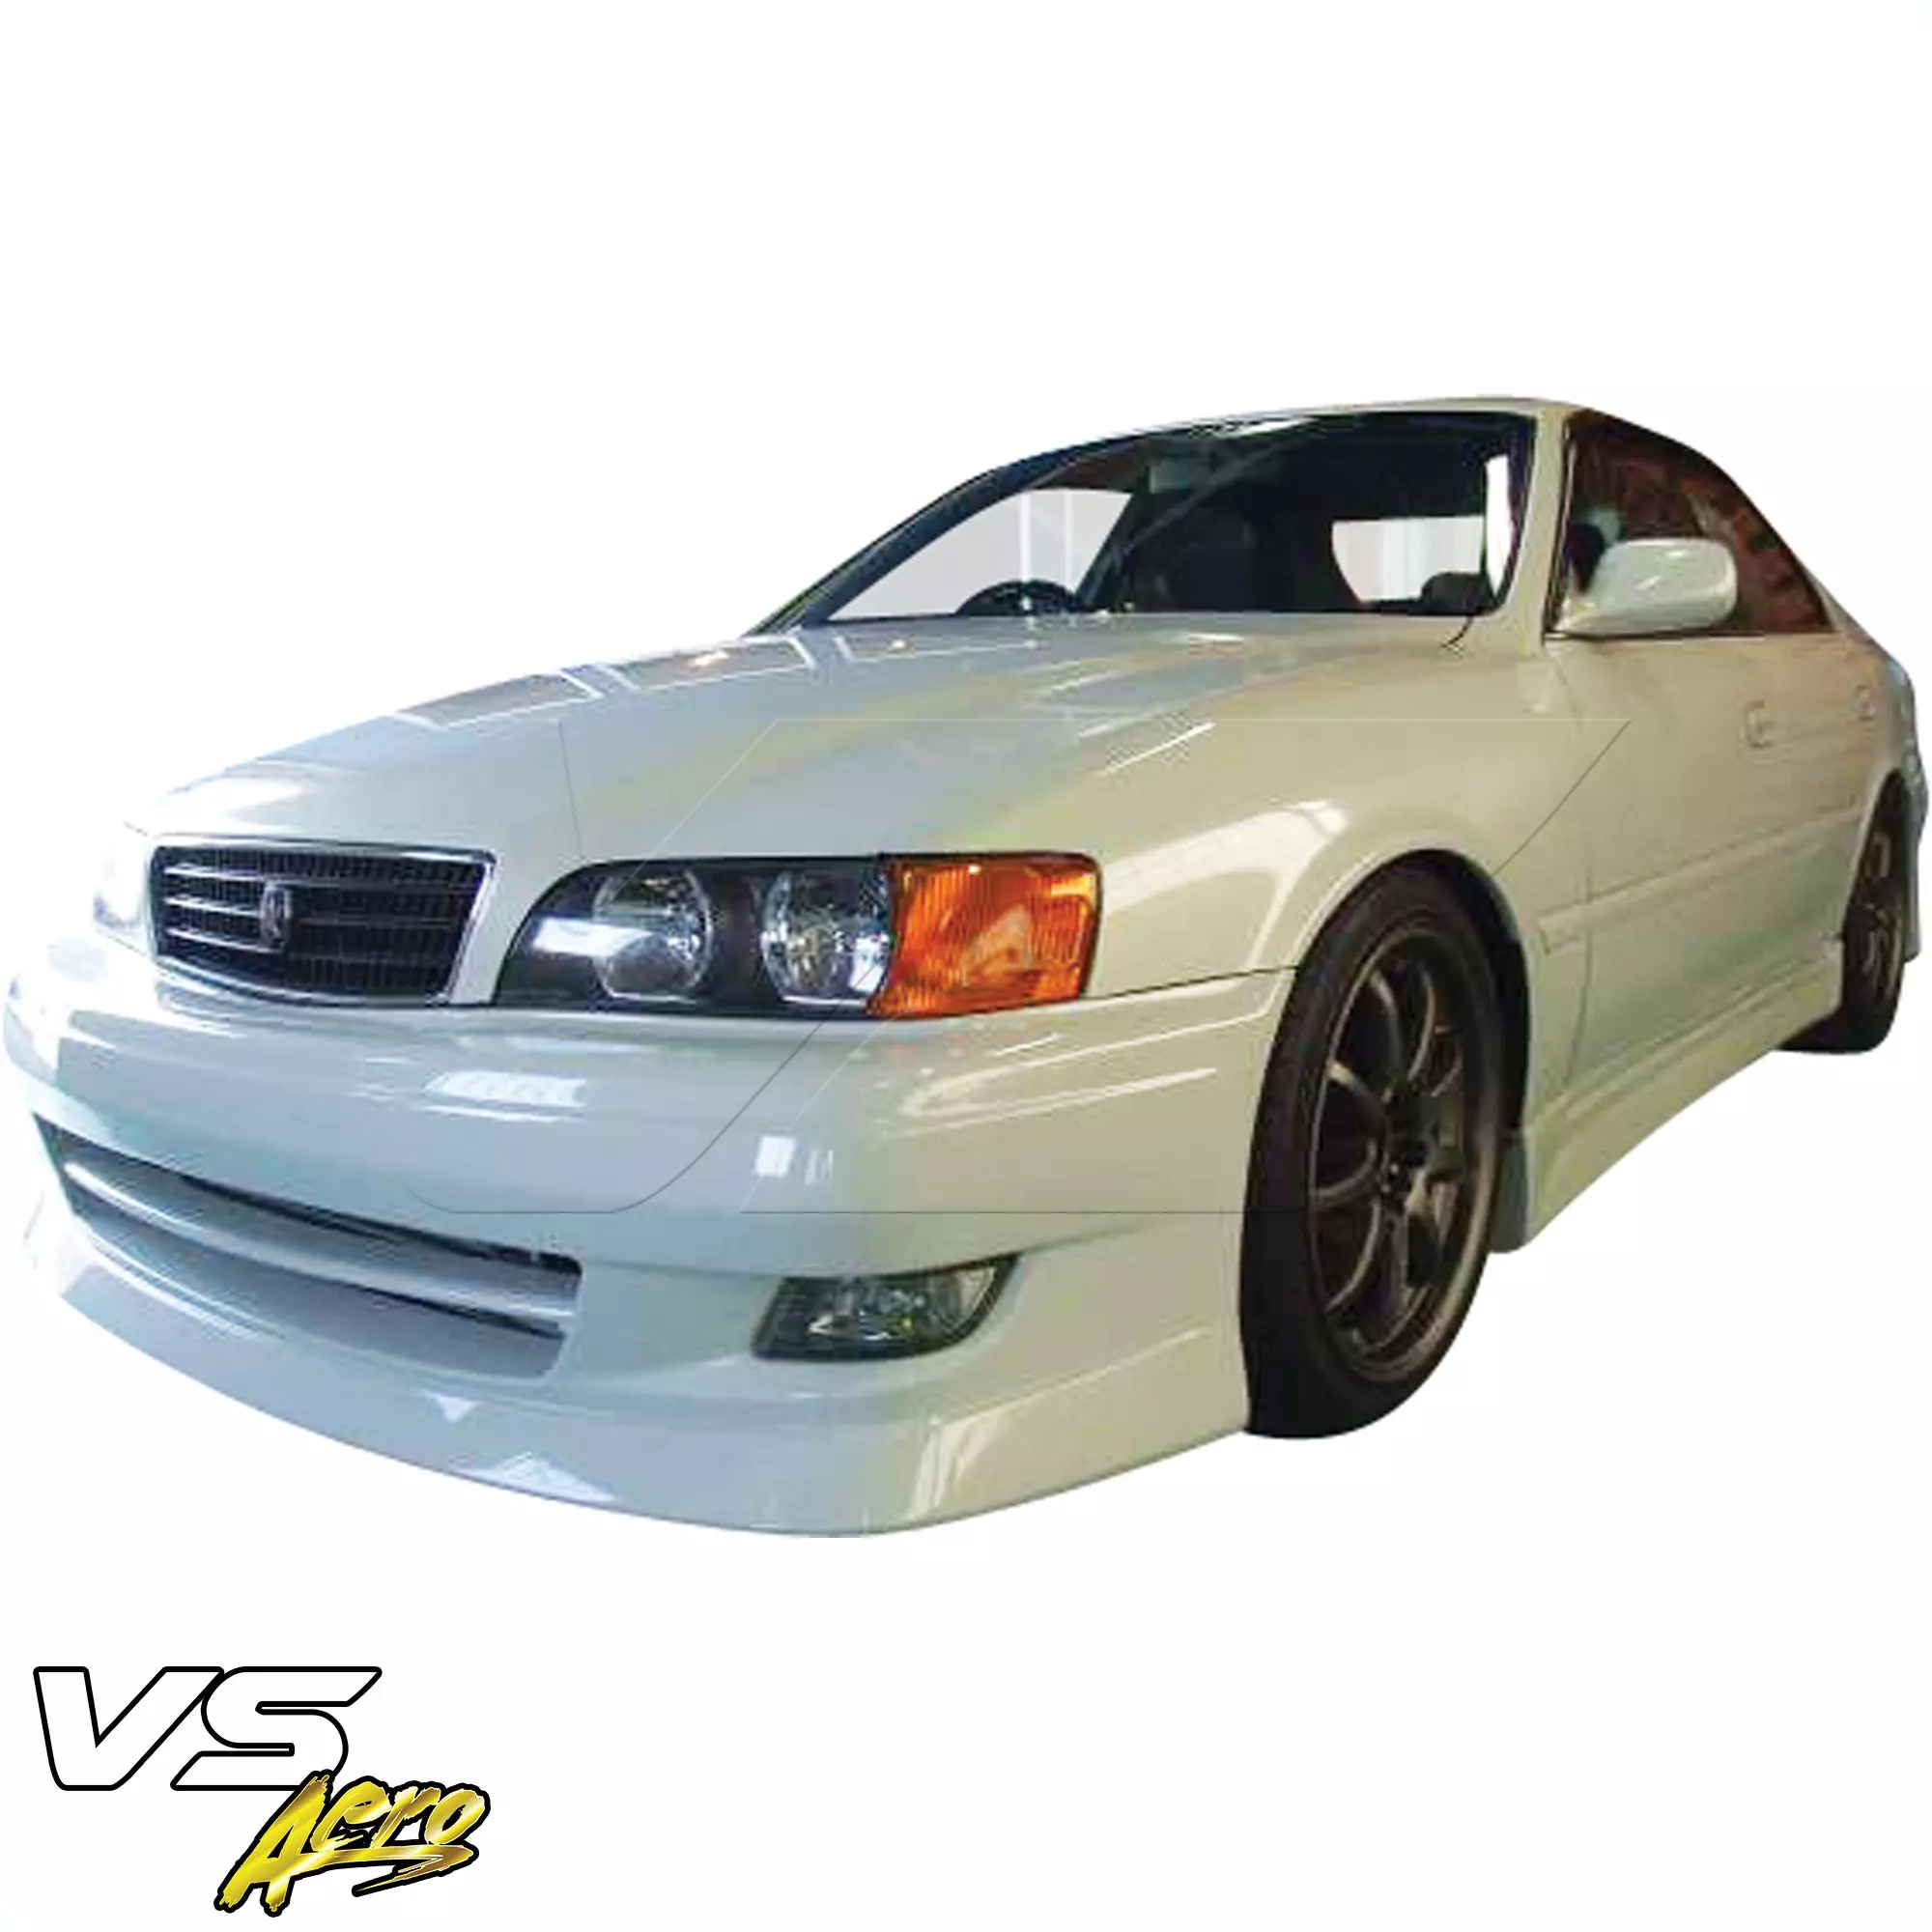 VSaero FRP URA vL Body Kit 4pc > Toyota Chaser JZX100 1996-2000 - Image 16